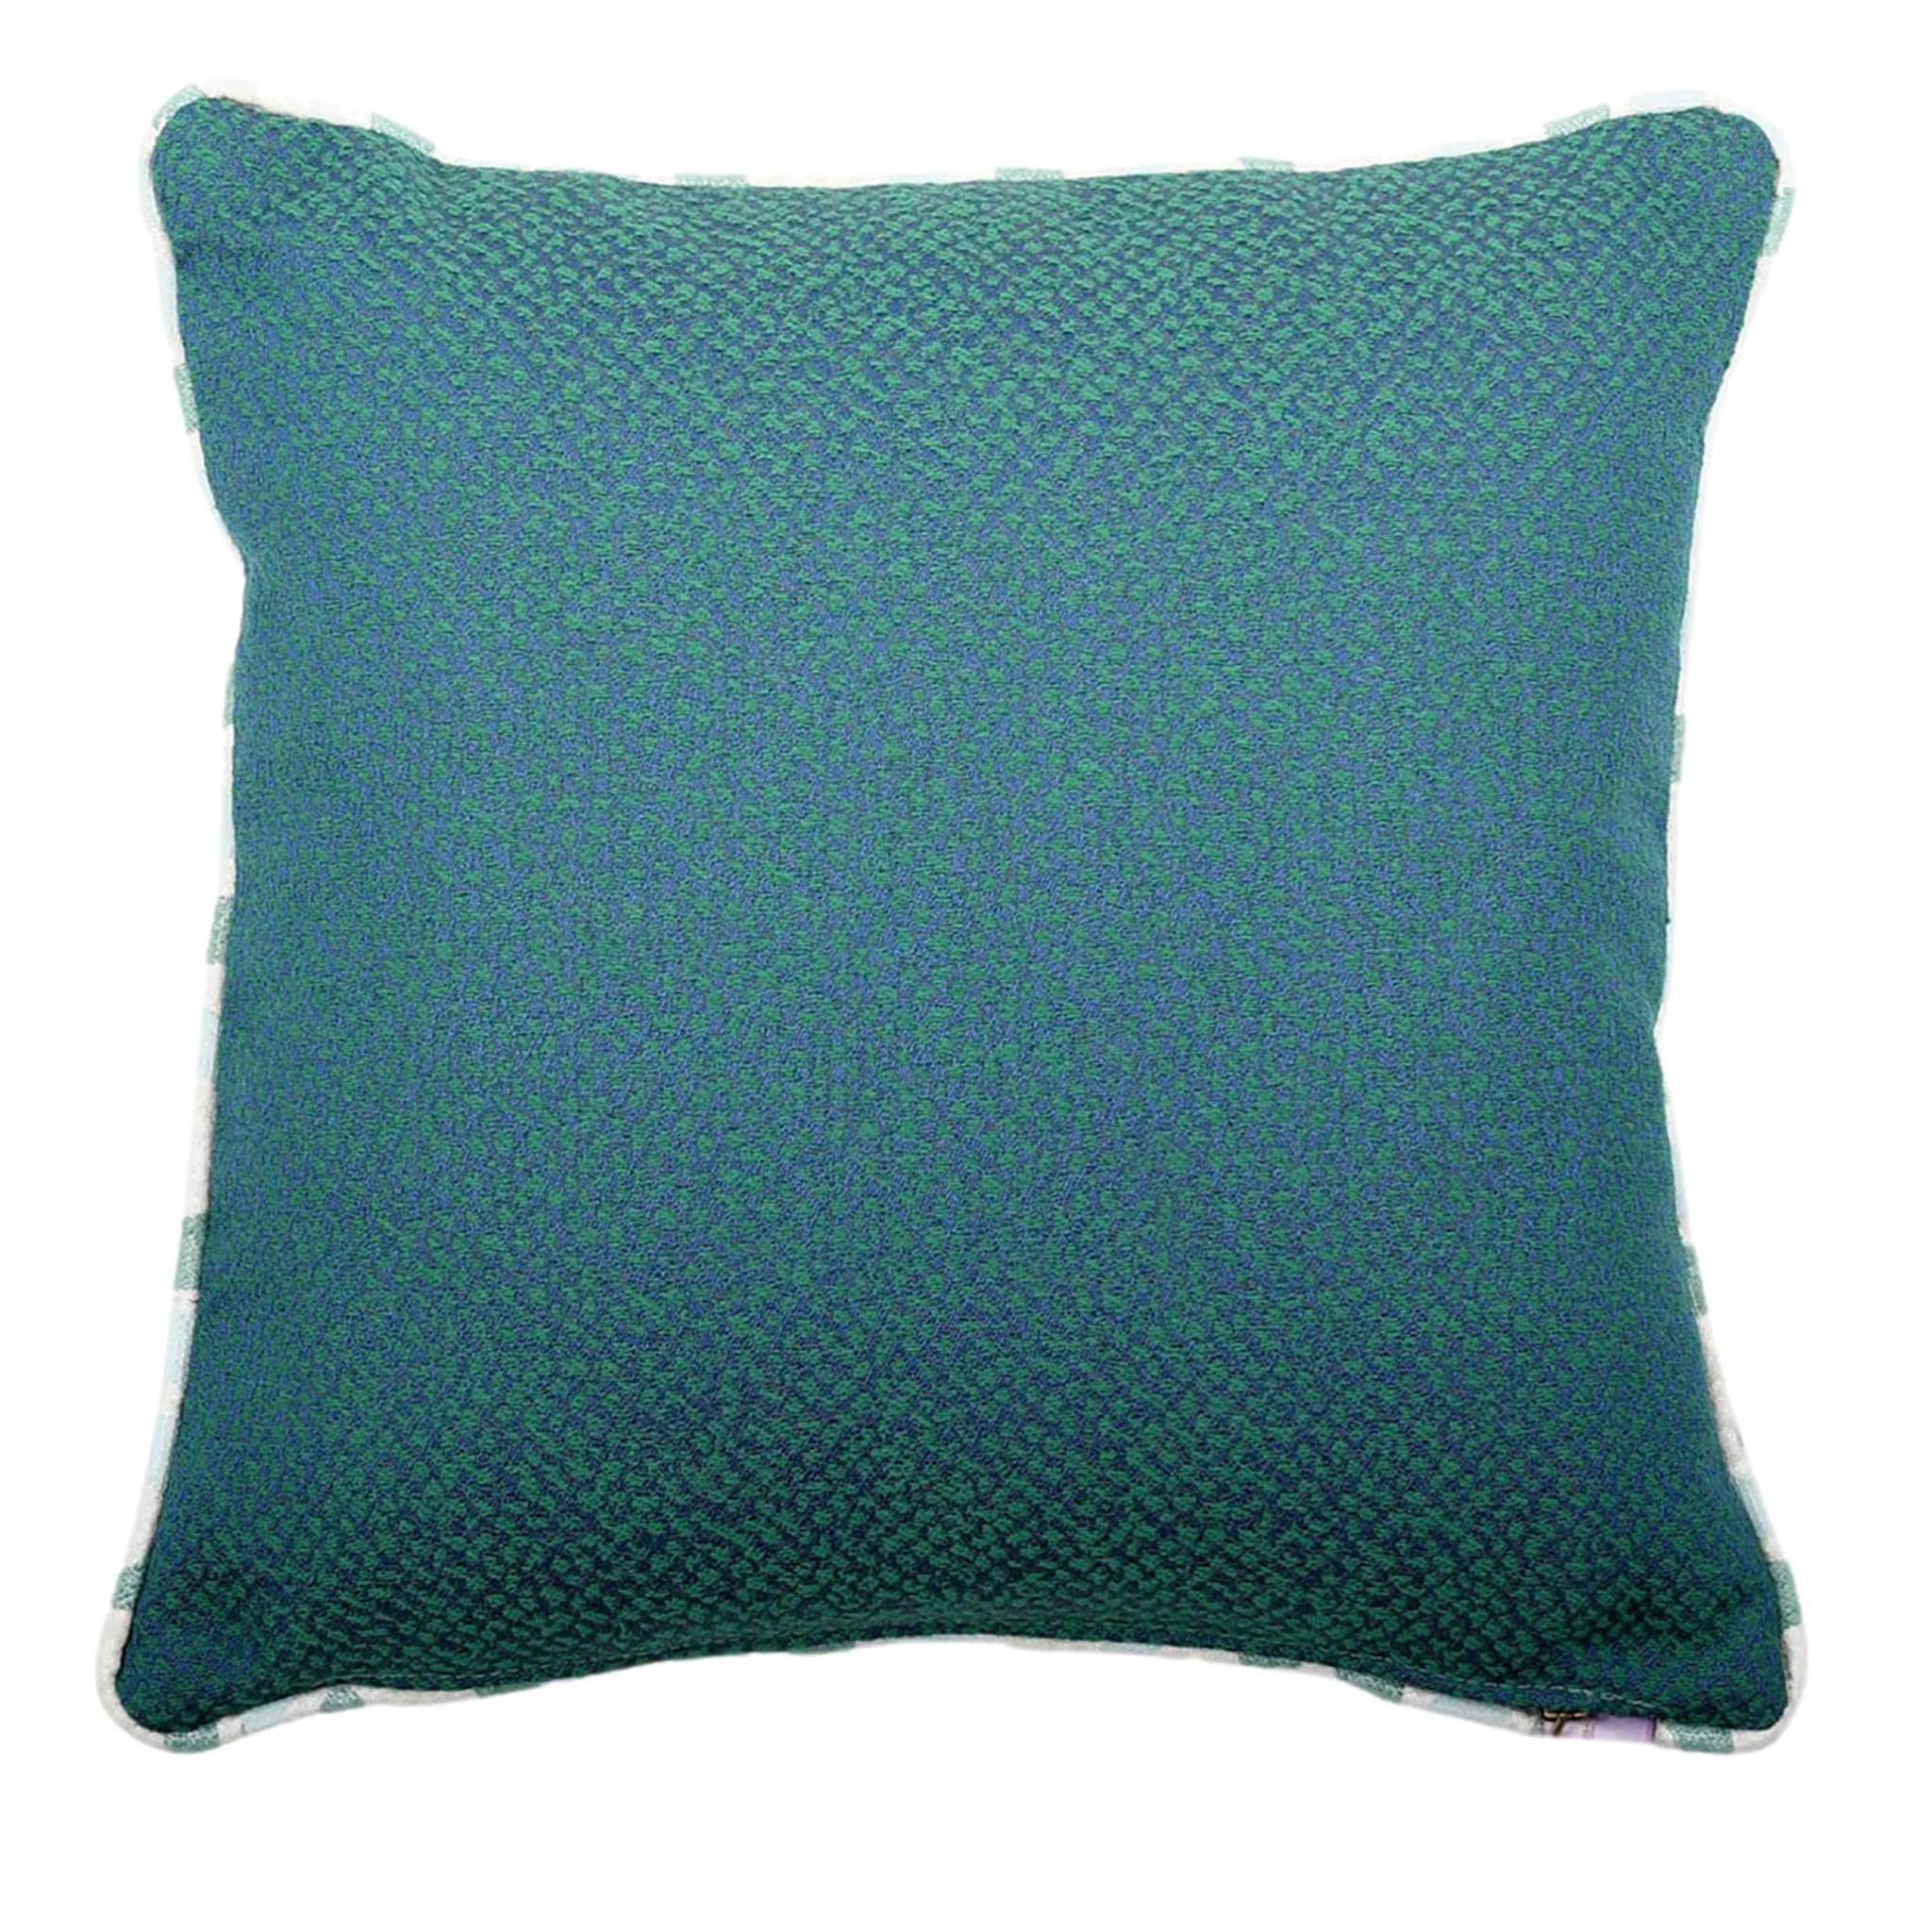 Blue-Green Carrè Cushion in false unit jacquard fabric - Main view